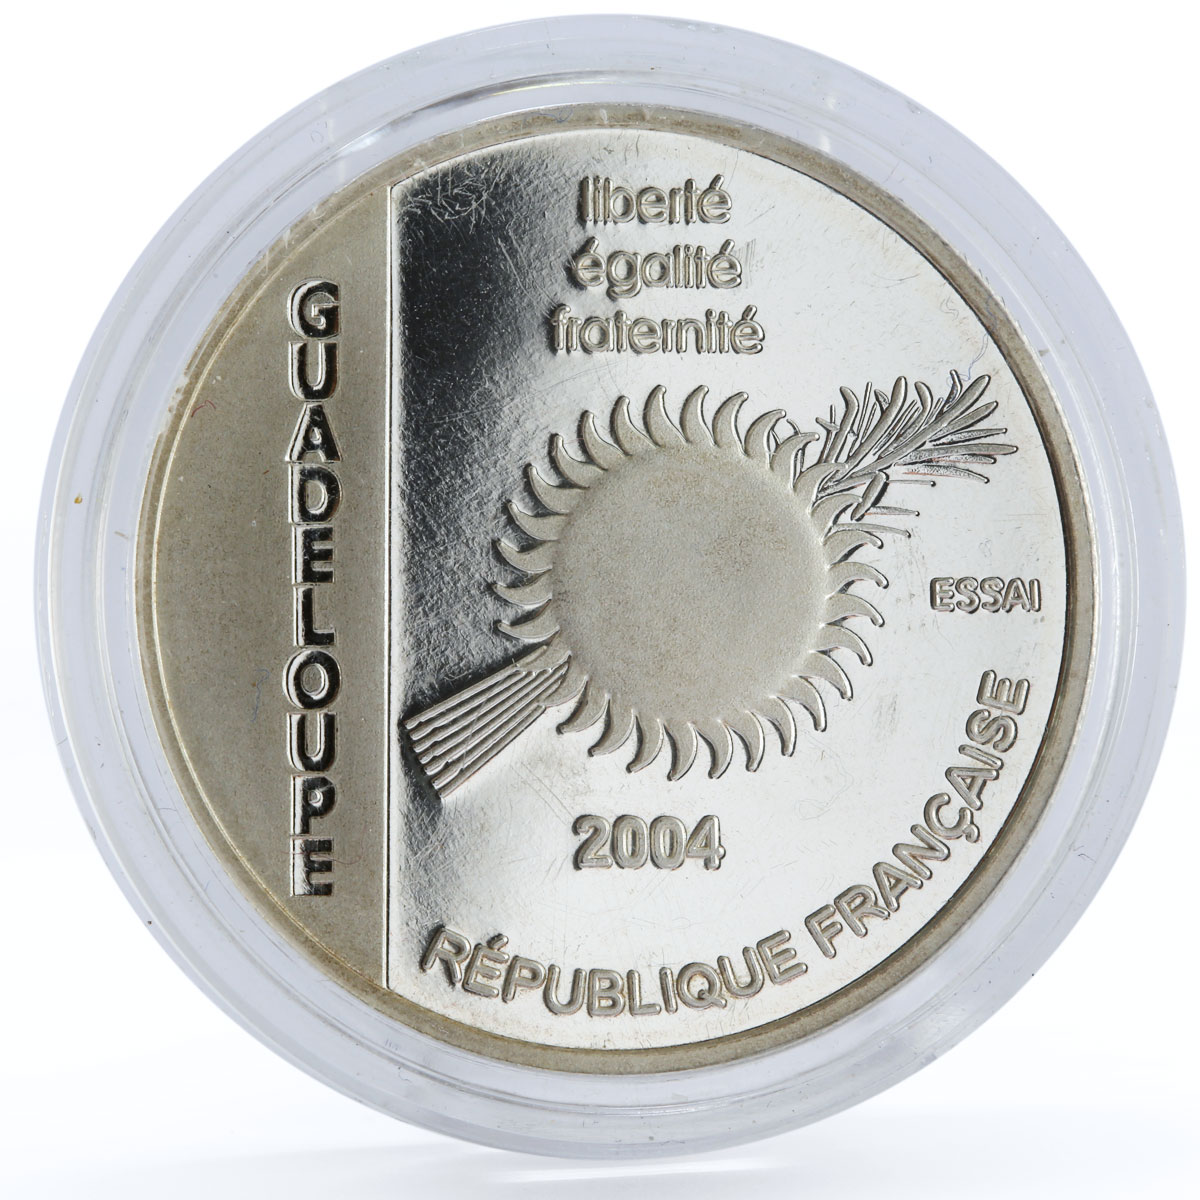 France 1 1/2 euro Cuirasse Gloire Ship Clipper silver proof coin 2004